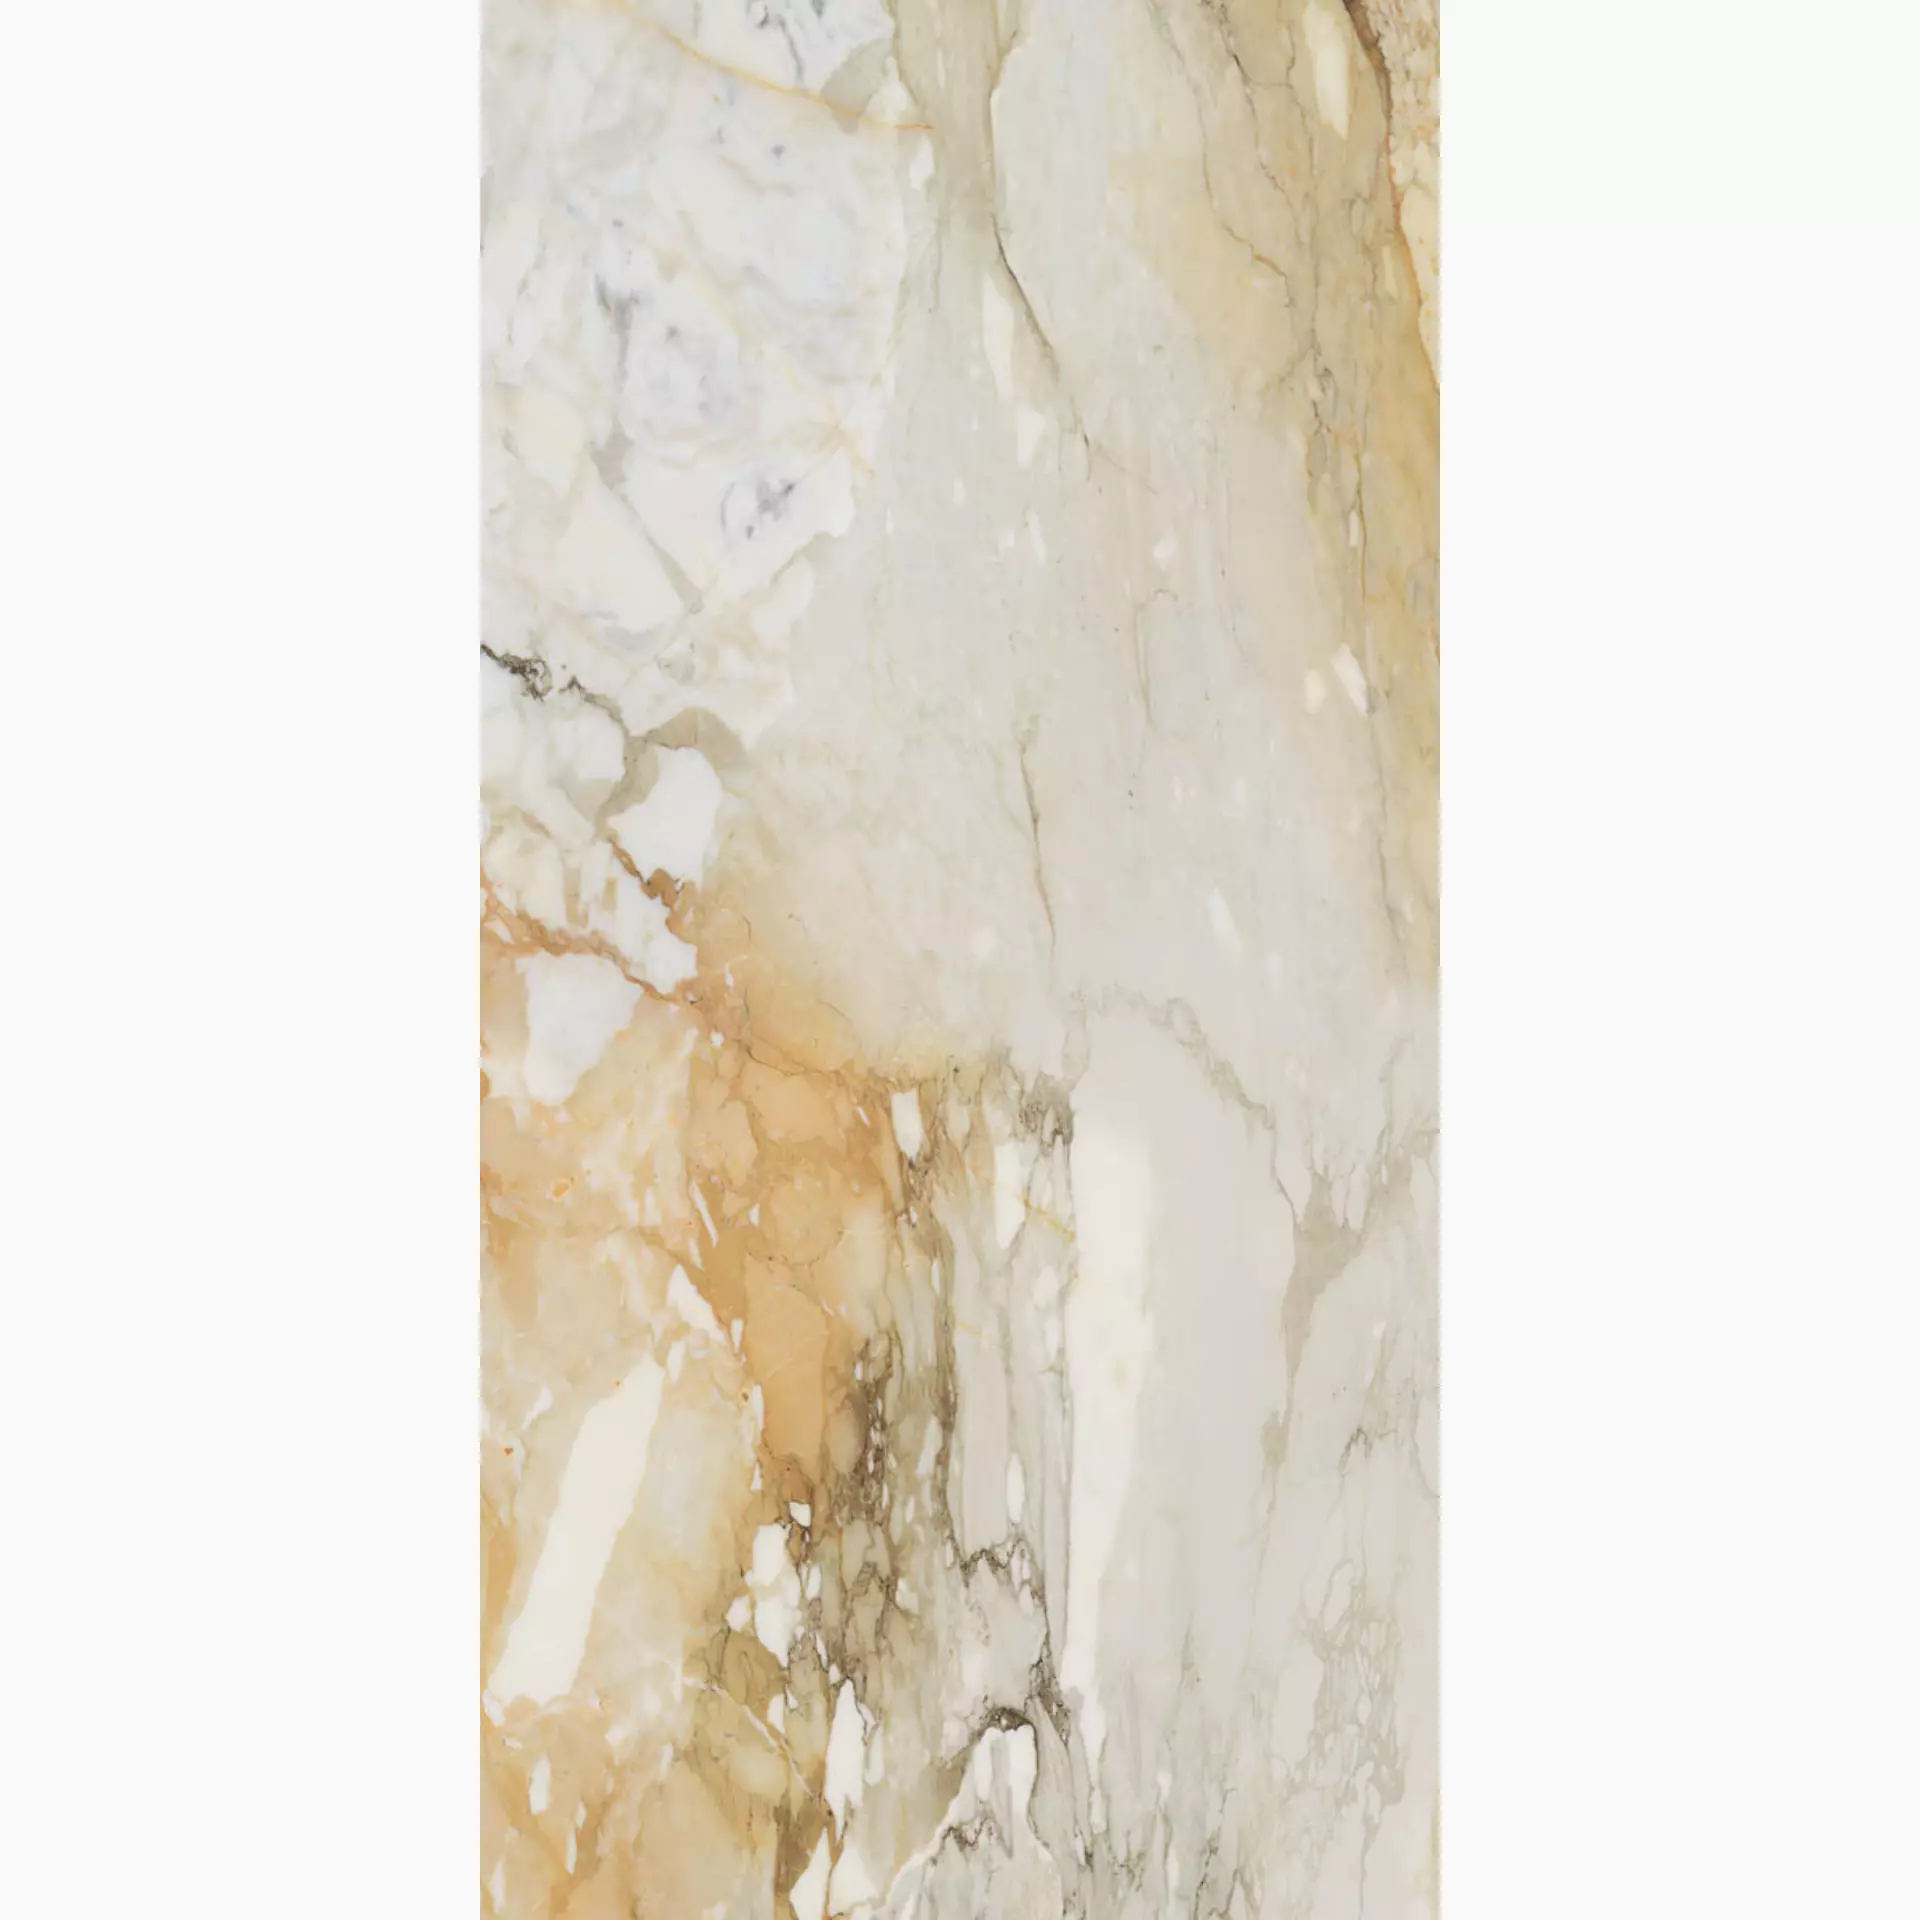 La Faenza Bianco White Honed Flat Glossy 166256 90x180cm rectified 10mm - CAL MV 9018 LP